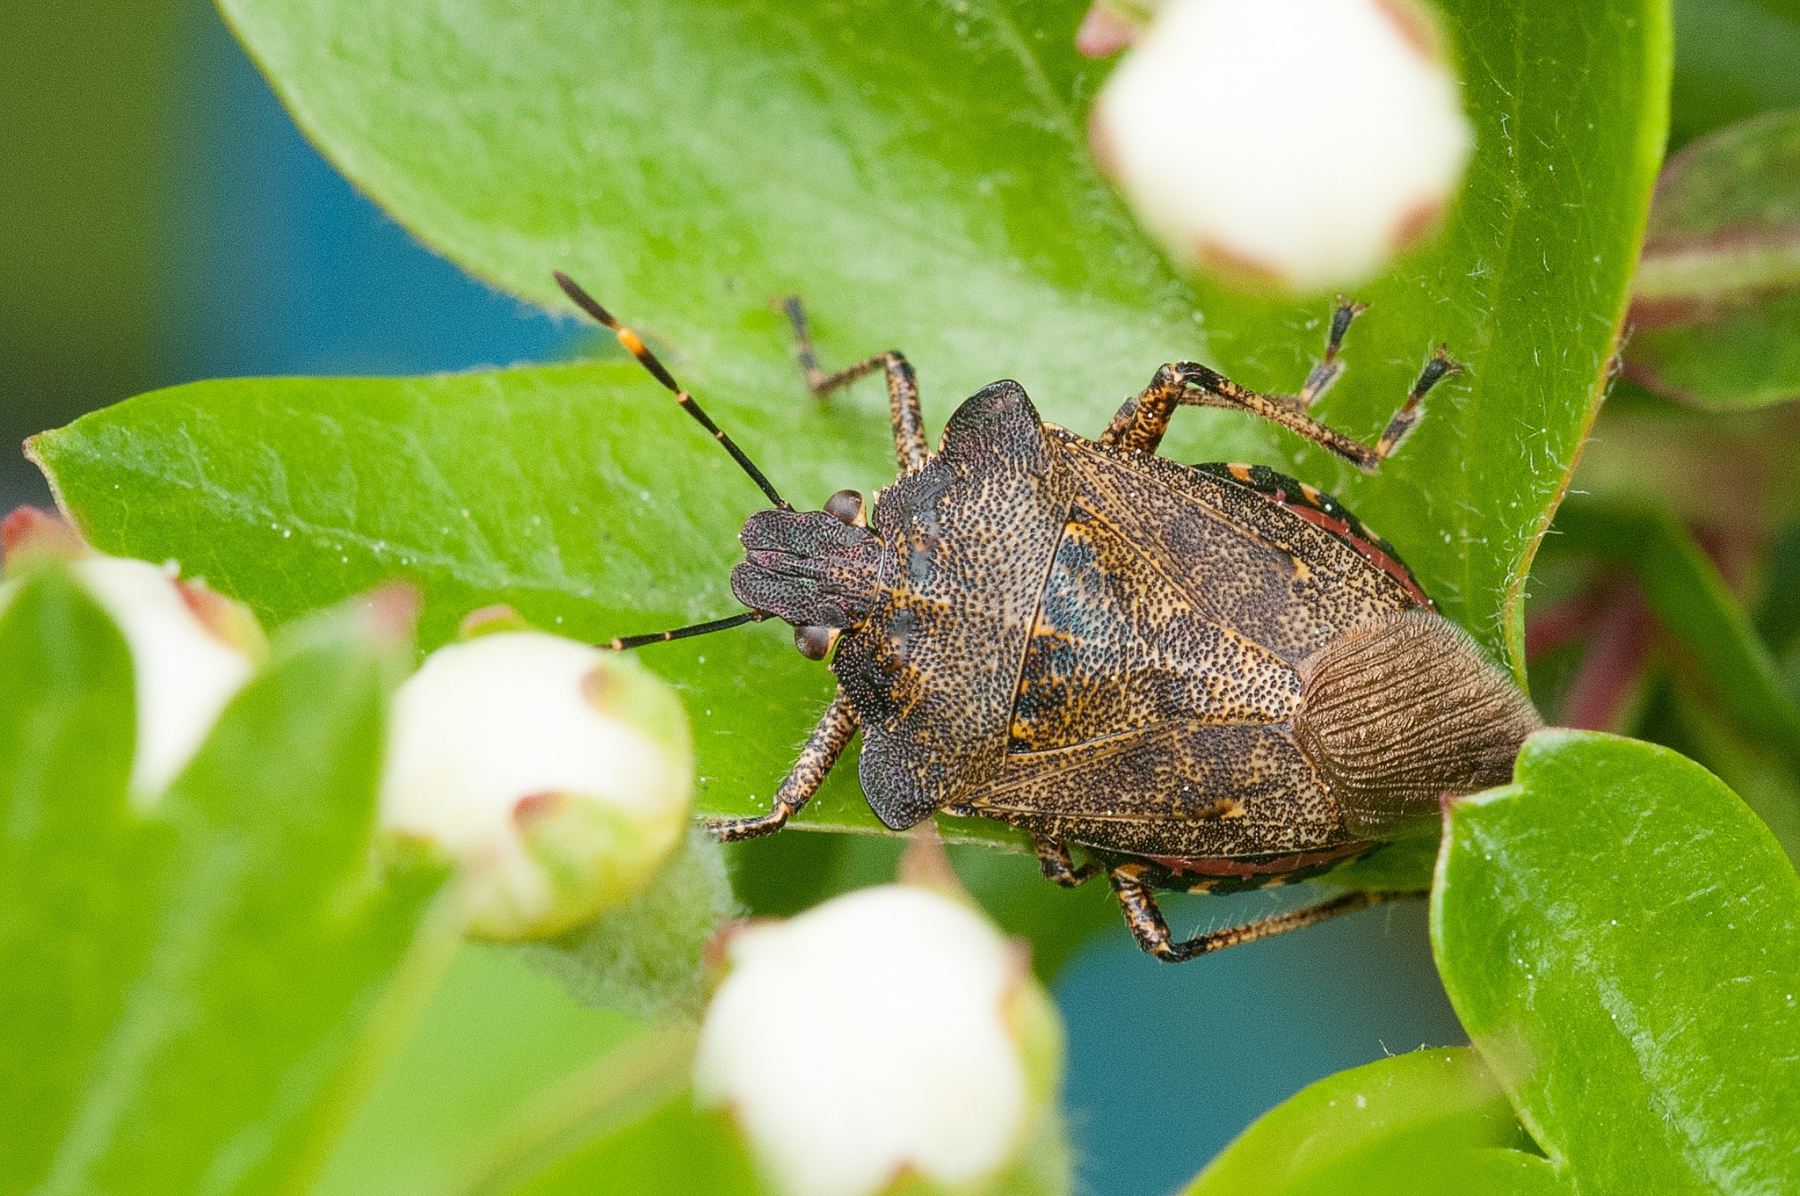 Troilus luridus - Bronze Shieldbug